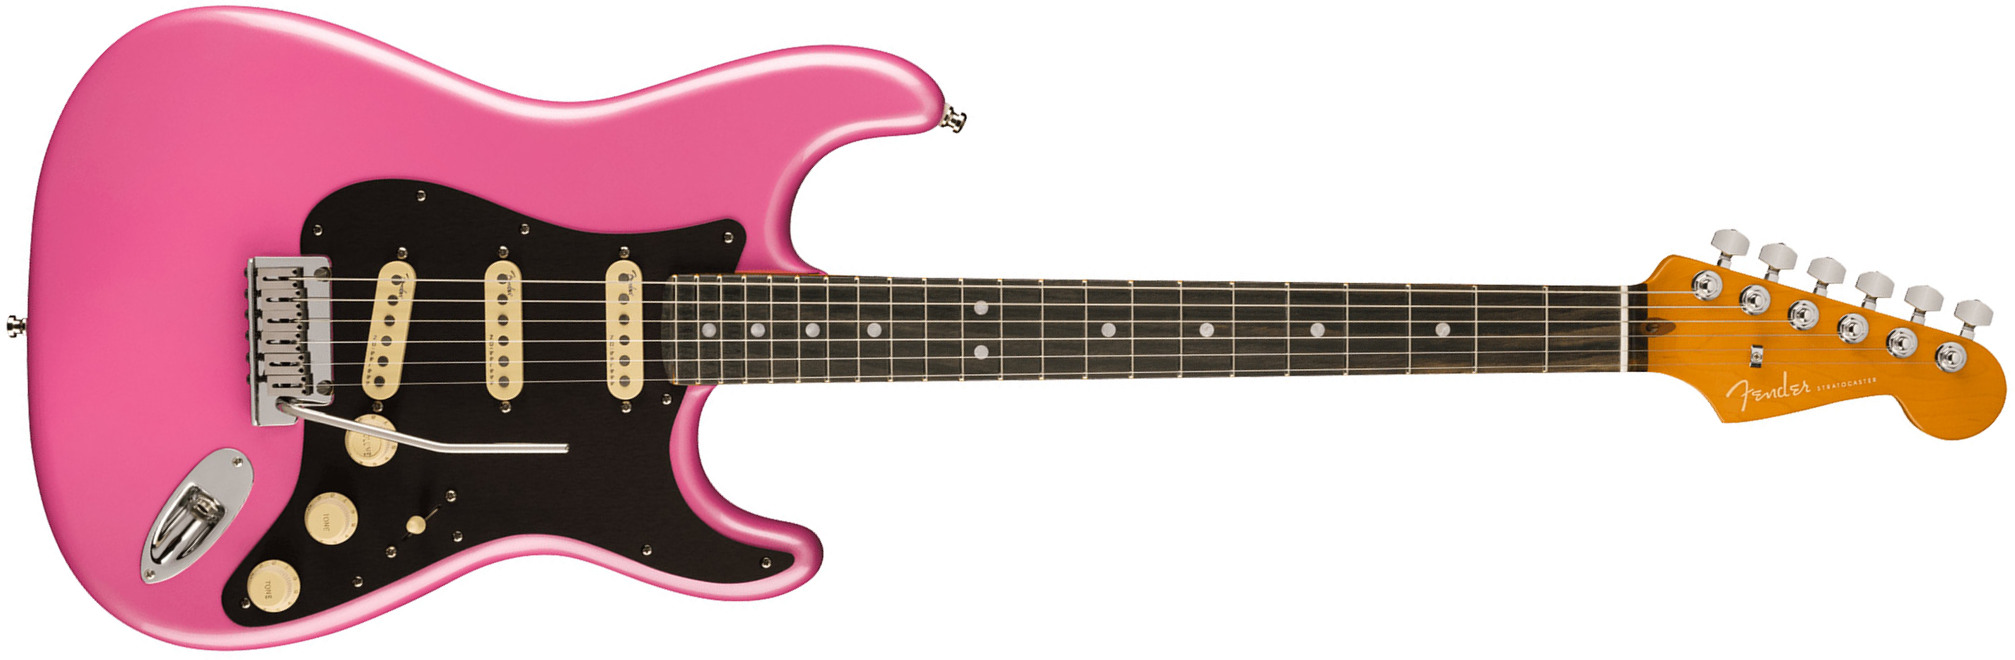 Fender Strat American Ultra Ltd Usa 3s Trem Eb - Bubble Gum Metallic - E-Gitarre in Str-Form - Main picture